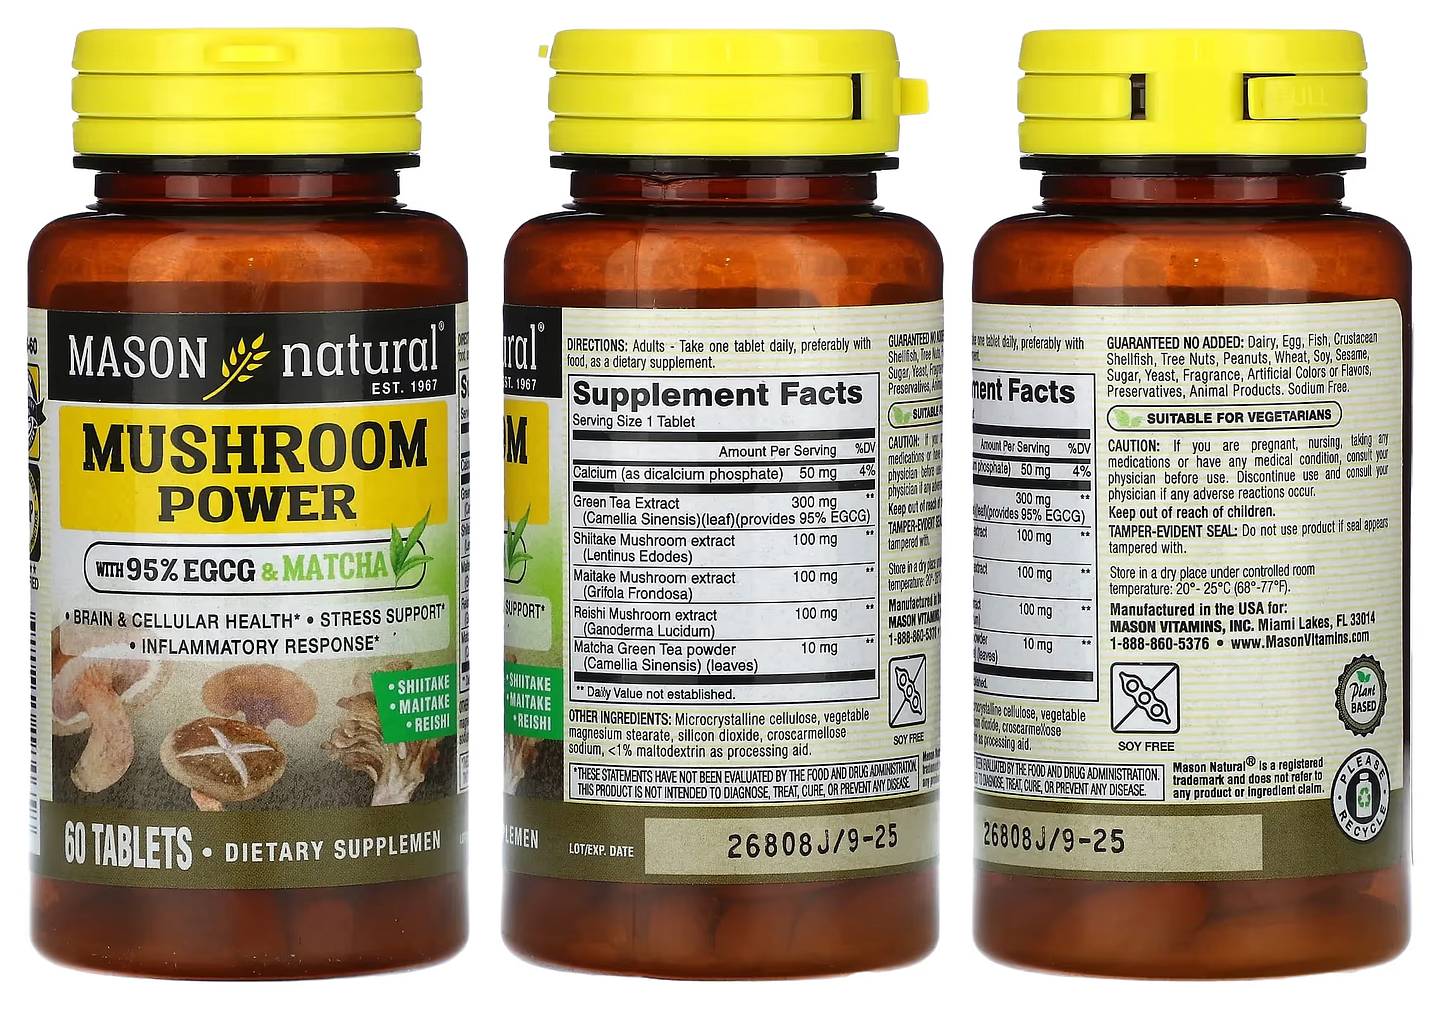 Mason Natural, Mushroom Power packaging